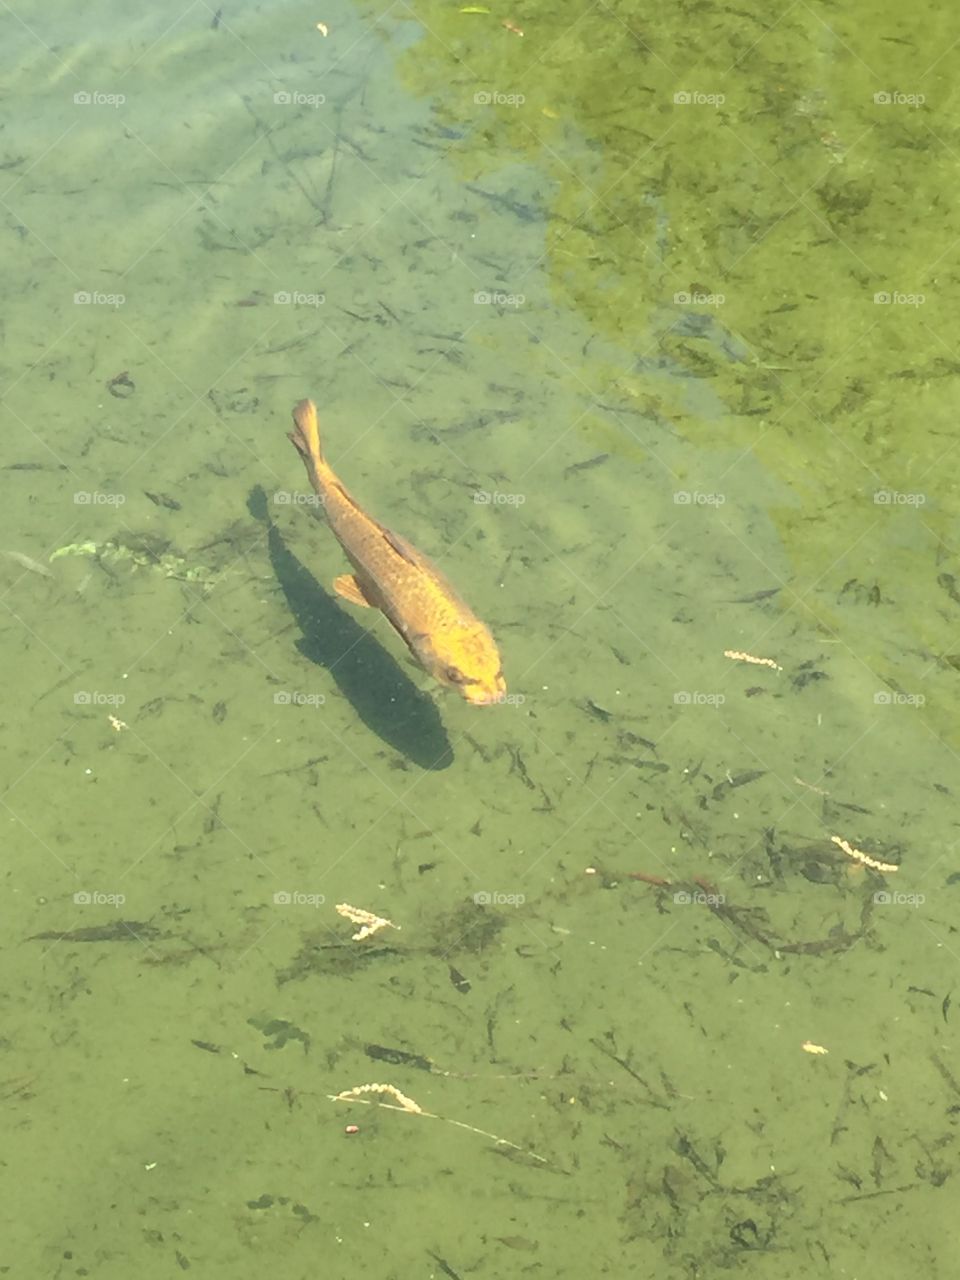 A golden koi swiftly swimming in a pond at the Getty Villa in LA.